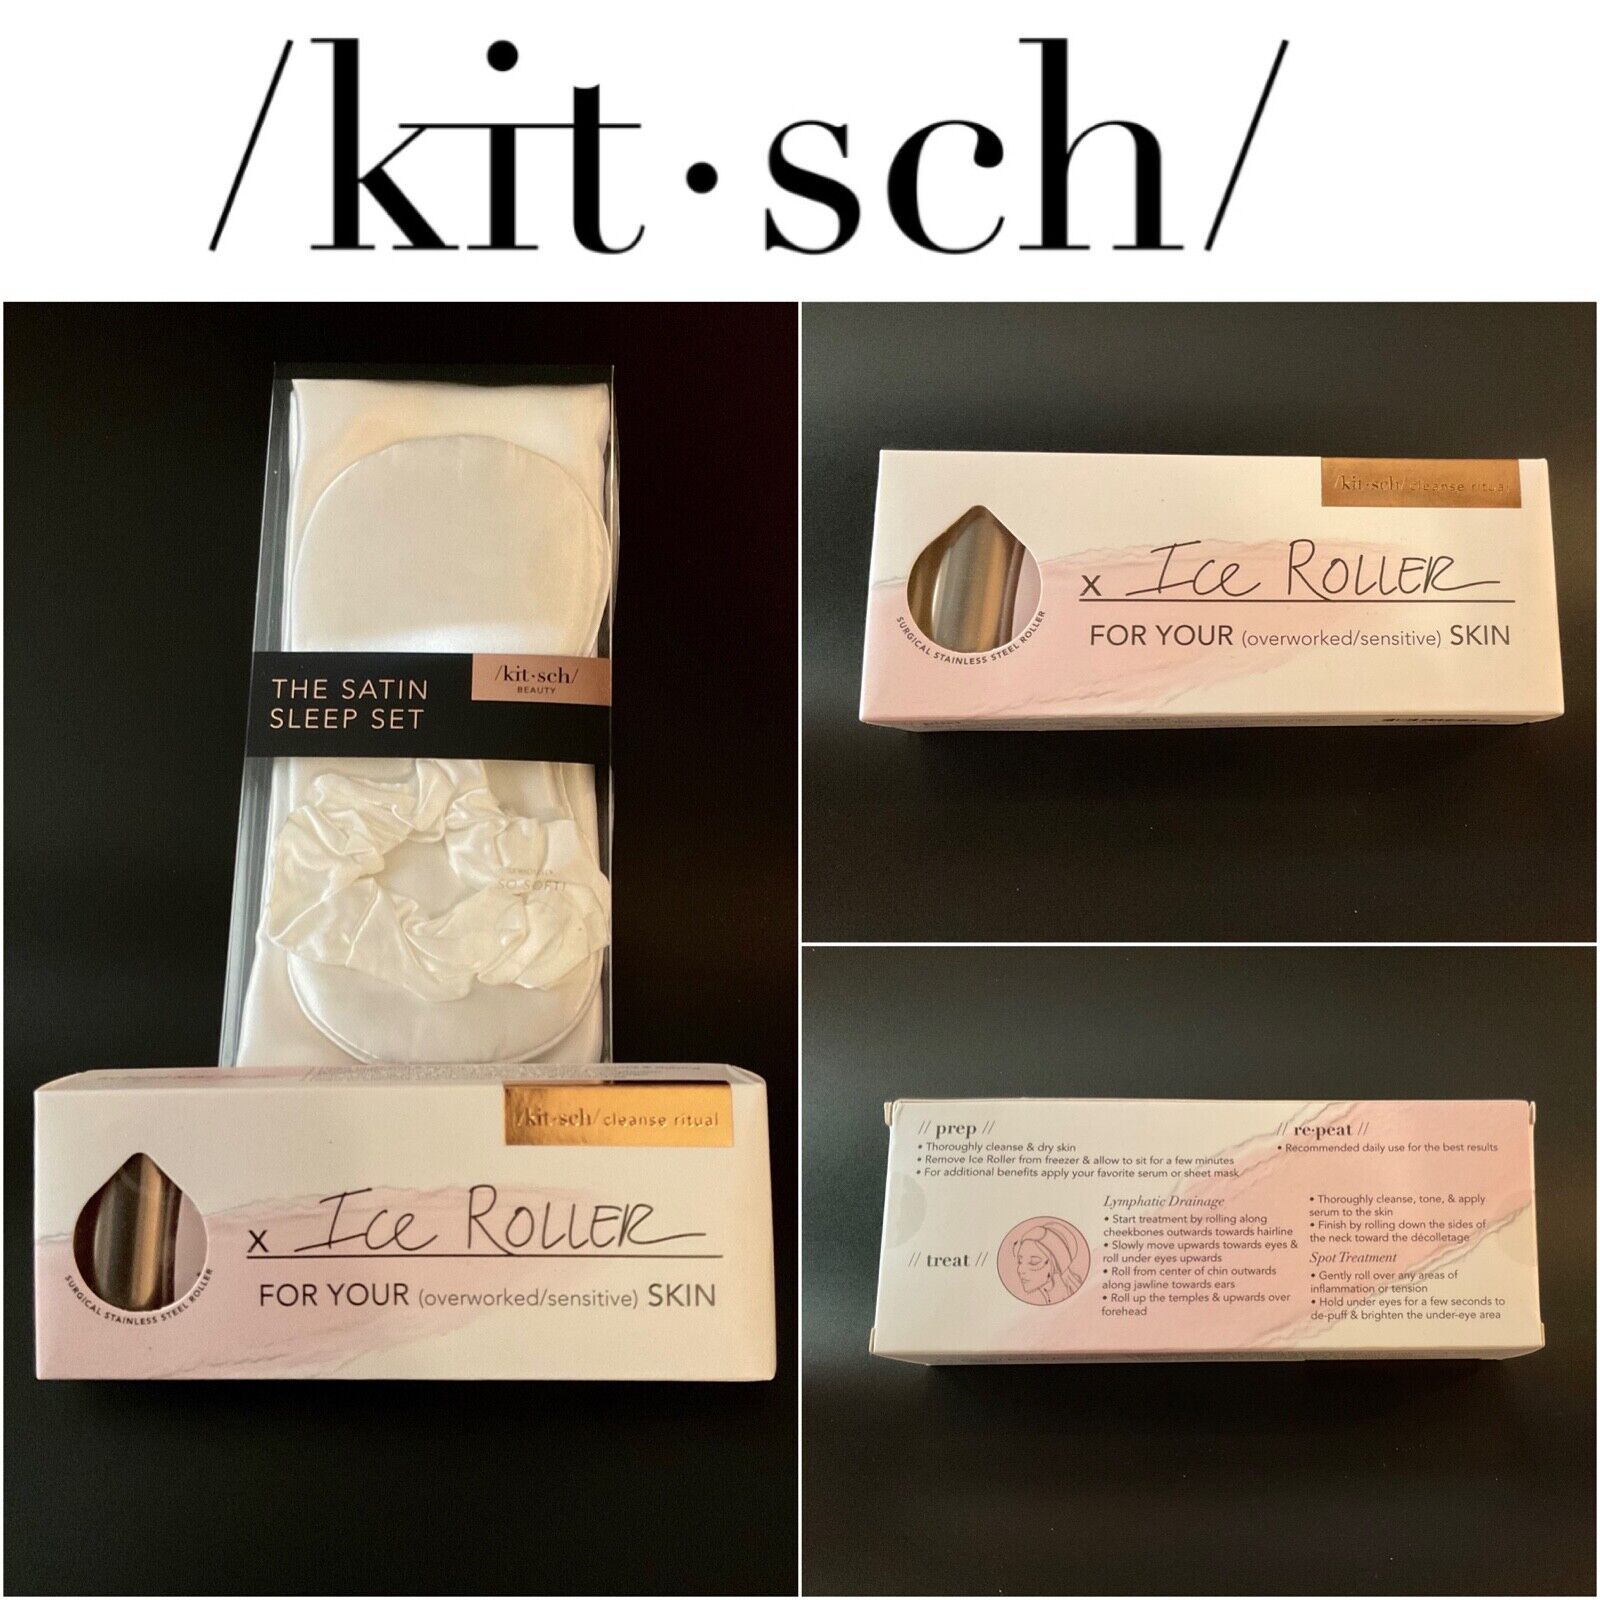 NIB Kit-sch Ivory Satin Sleep Set & Kit-sch Ice Roller • MSRP $54 • Pure Luxury Kitsch Does Not Apply